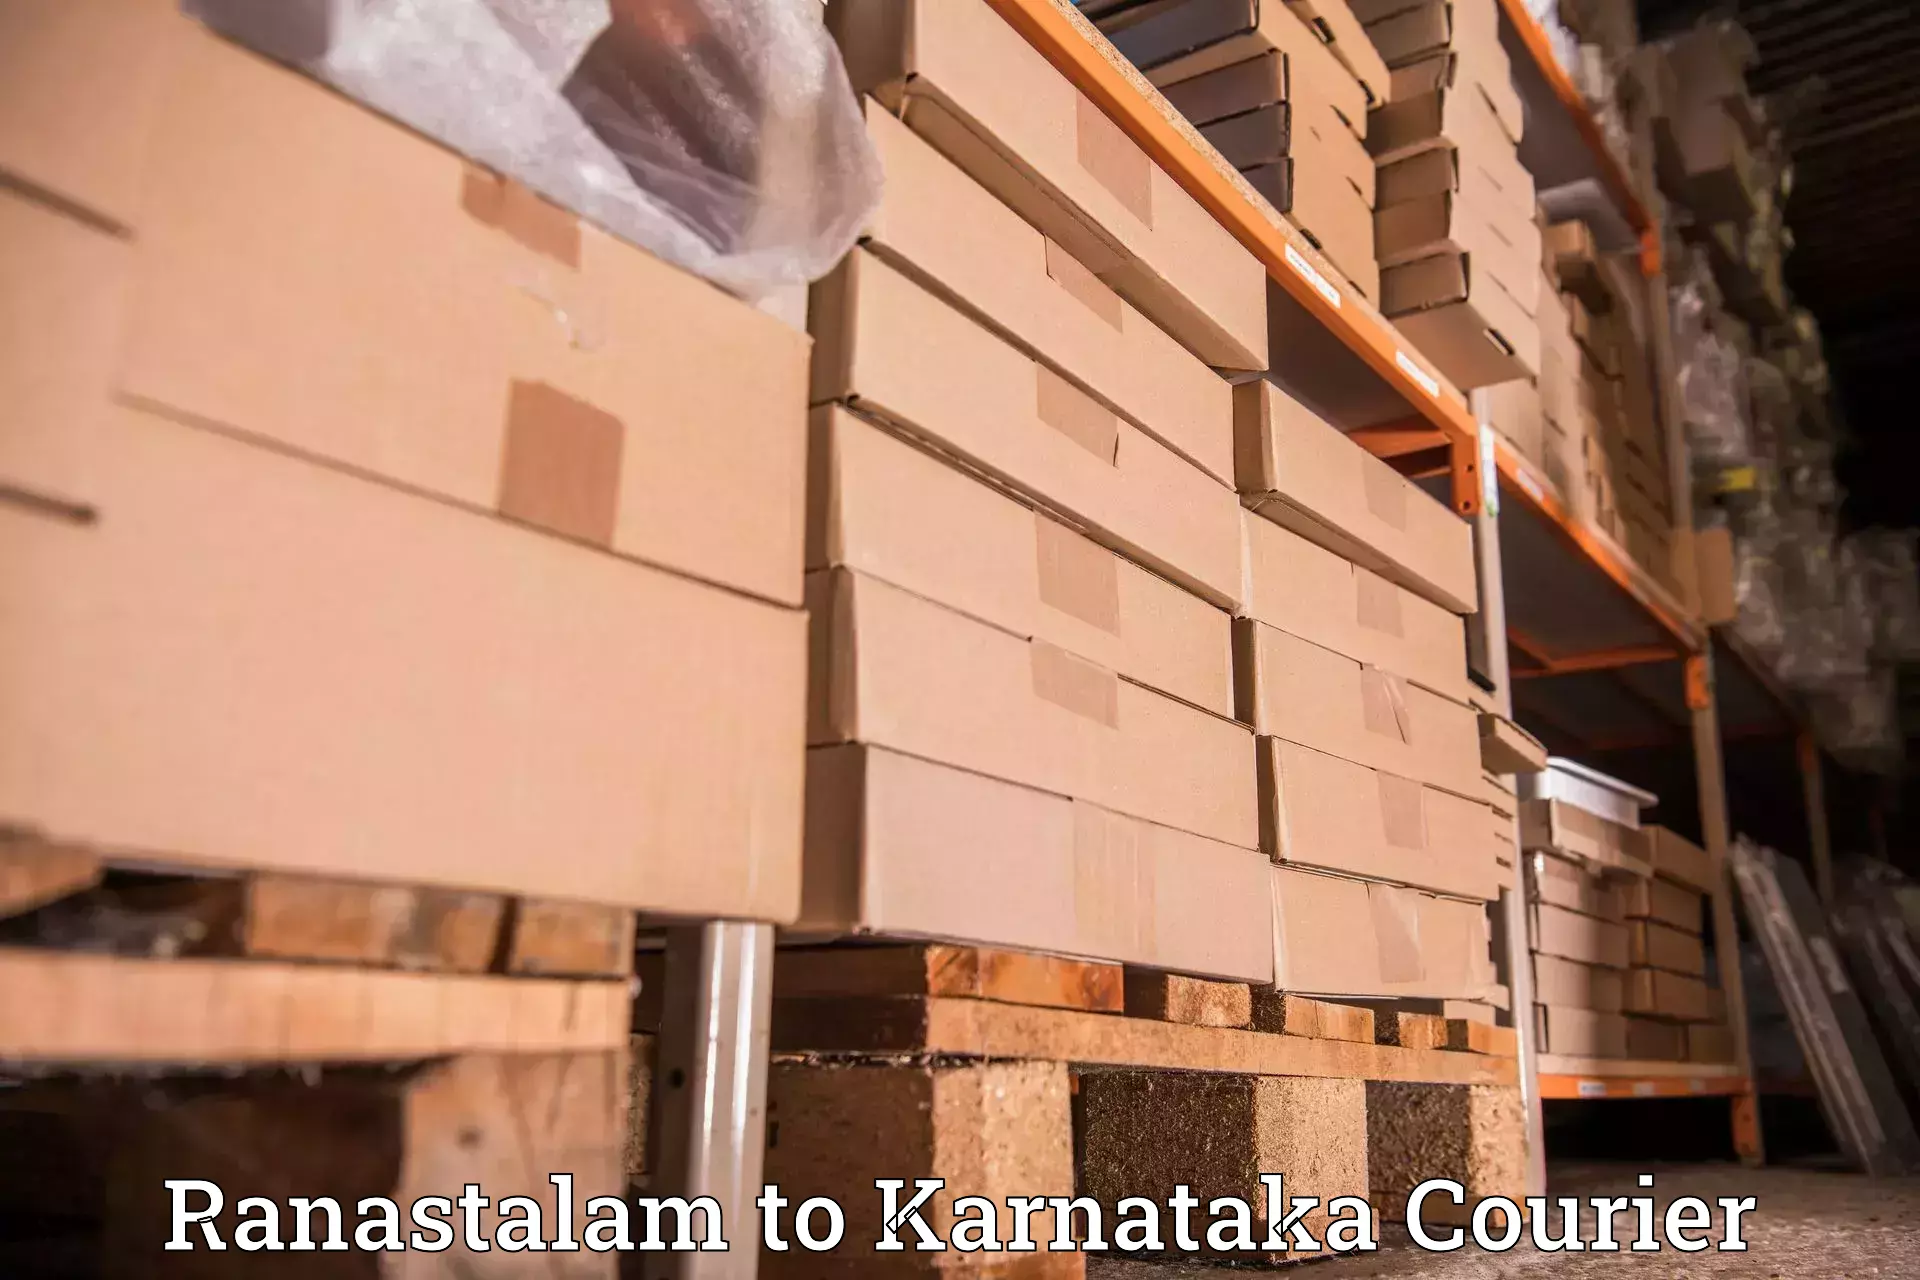 Courier service partnerships Ranastalam to Savanur